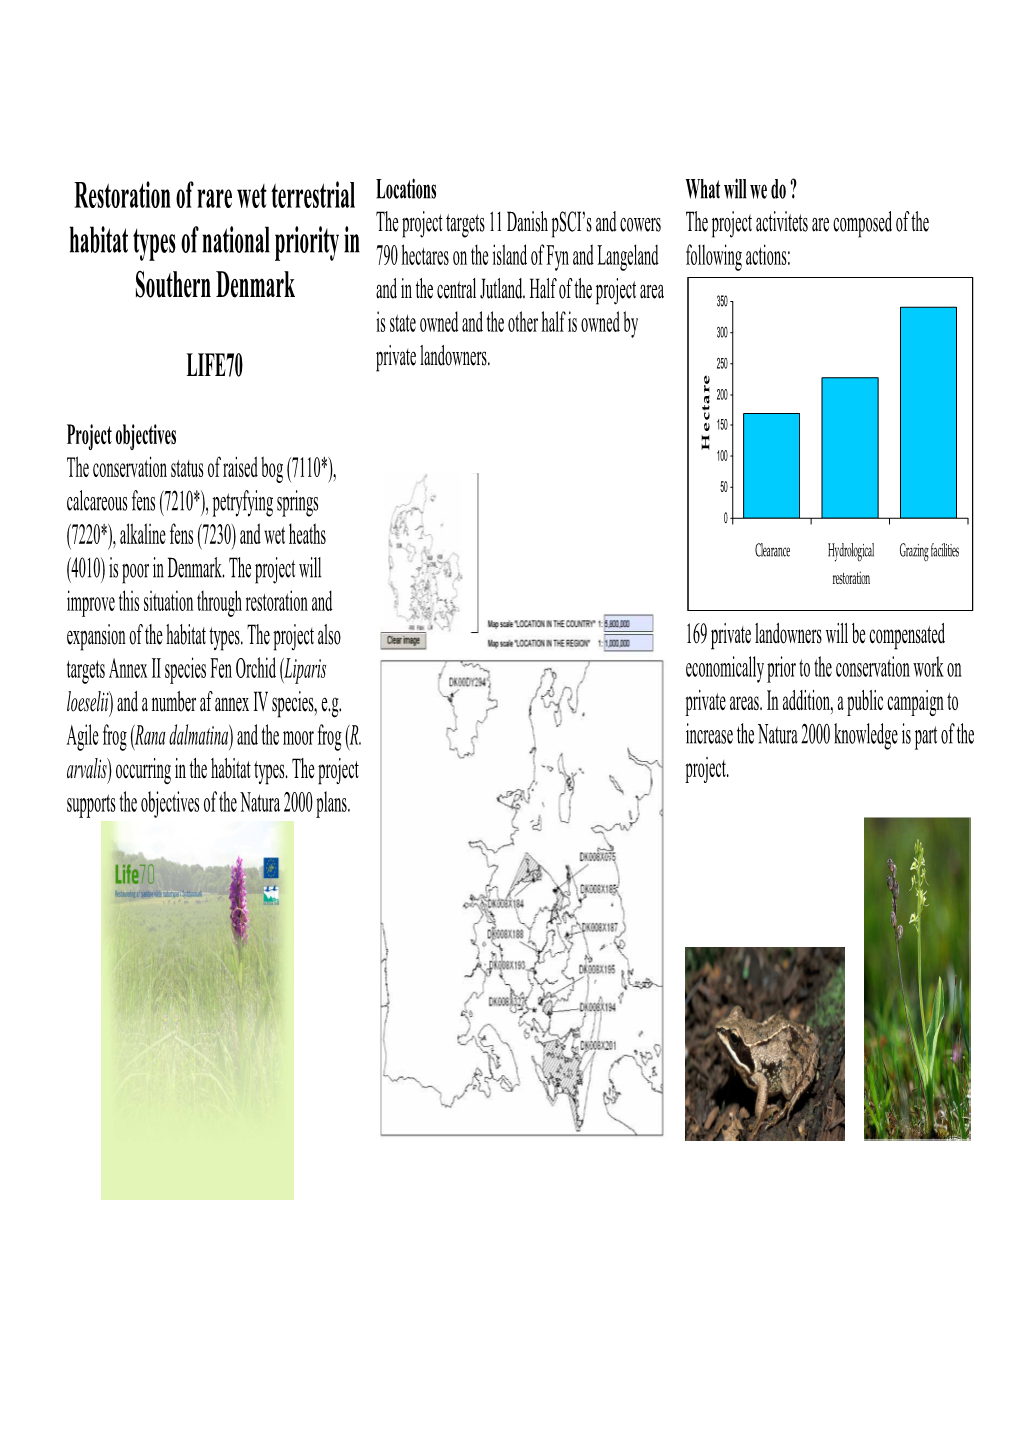 Restoration of Rare Wet Terrestrial Habitat Types Of